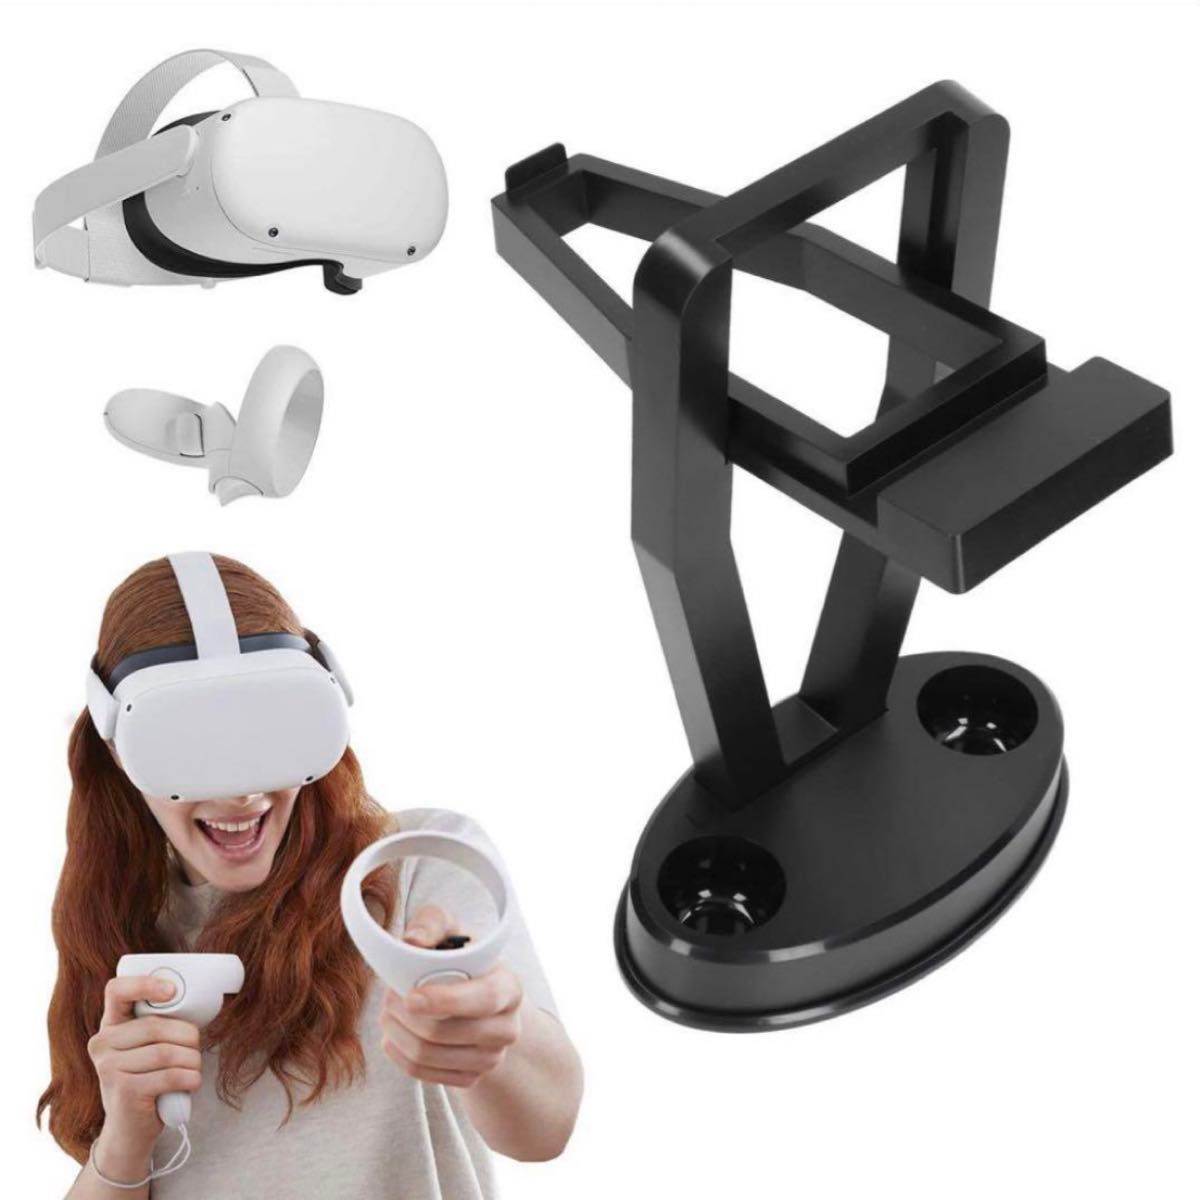 VR ゴーグル スタンド PS  VR Quest2 ディスプレイスタンド 黒 Oculus